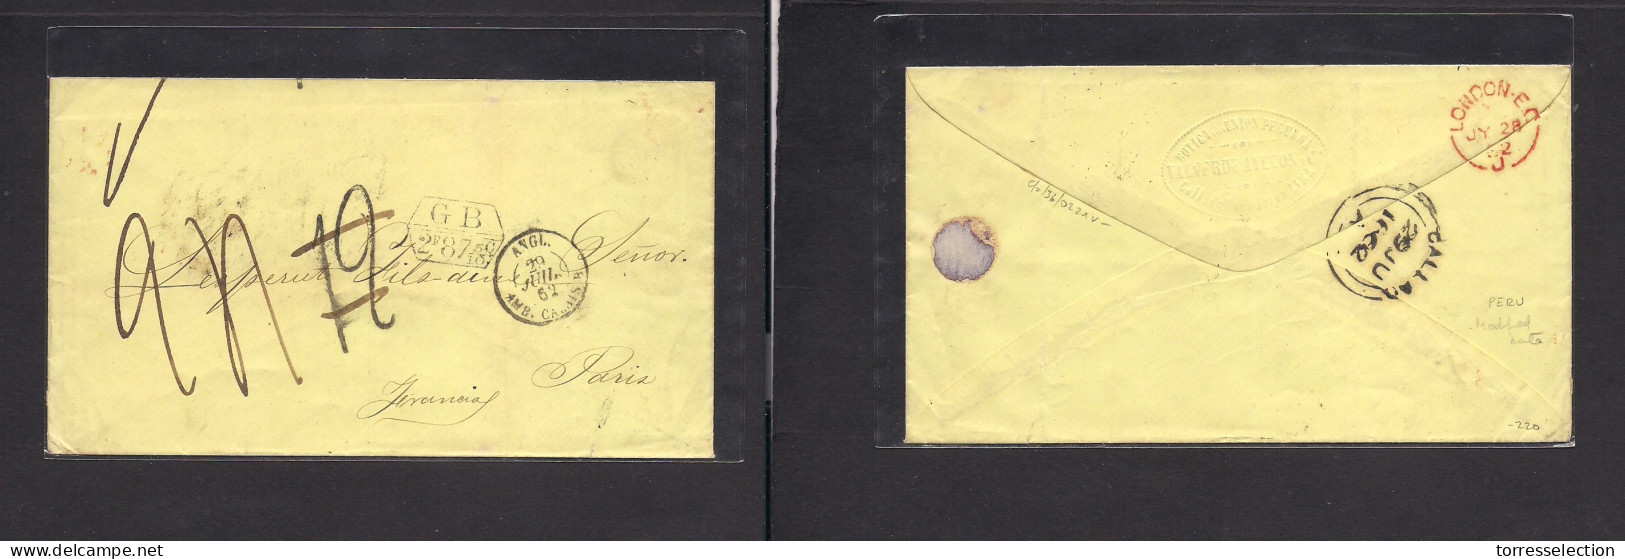 PERU. 1862 (29 June) Modified Rate. Callao - France, Paris (29 July) Via London + BPO Stampless Envelope. - Pérou